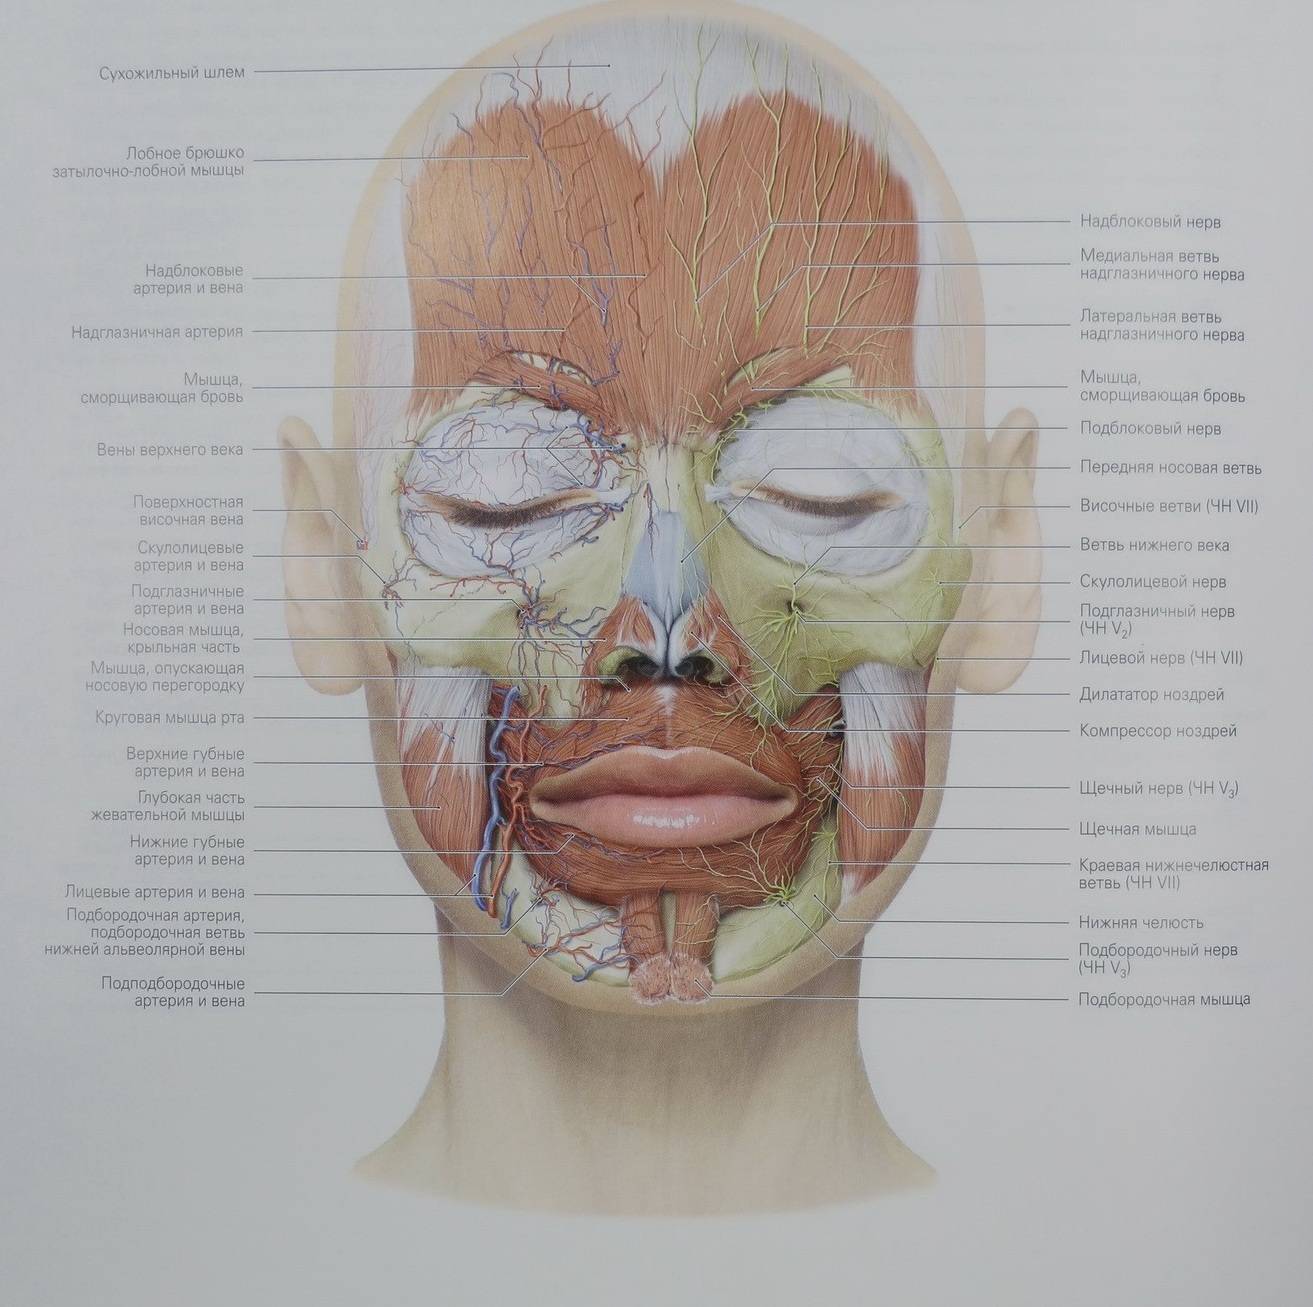 Косметология мышцы. Иннервация мышц лица анатомия. Анатомия лица человека сосуды и нервы мышцы. Иннервация лица анатомия для косметологов. Анатомия сосуды и нервы лицалица.